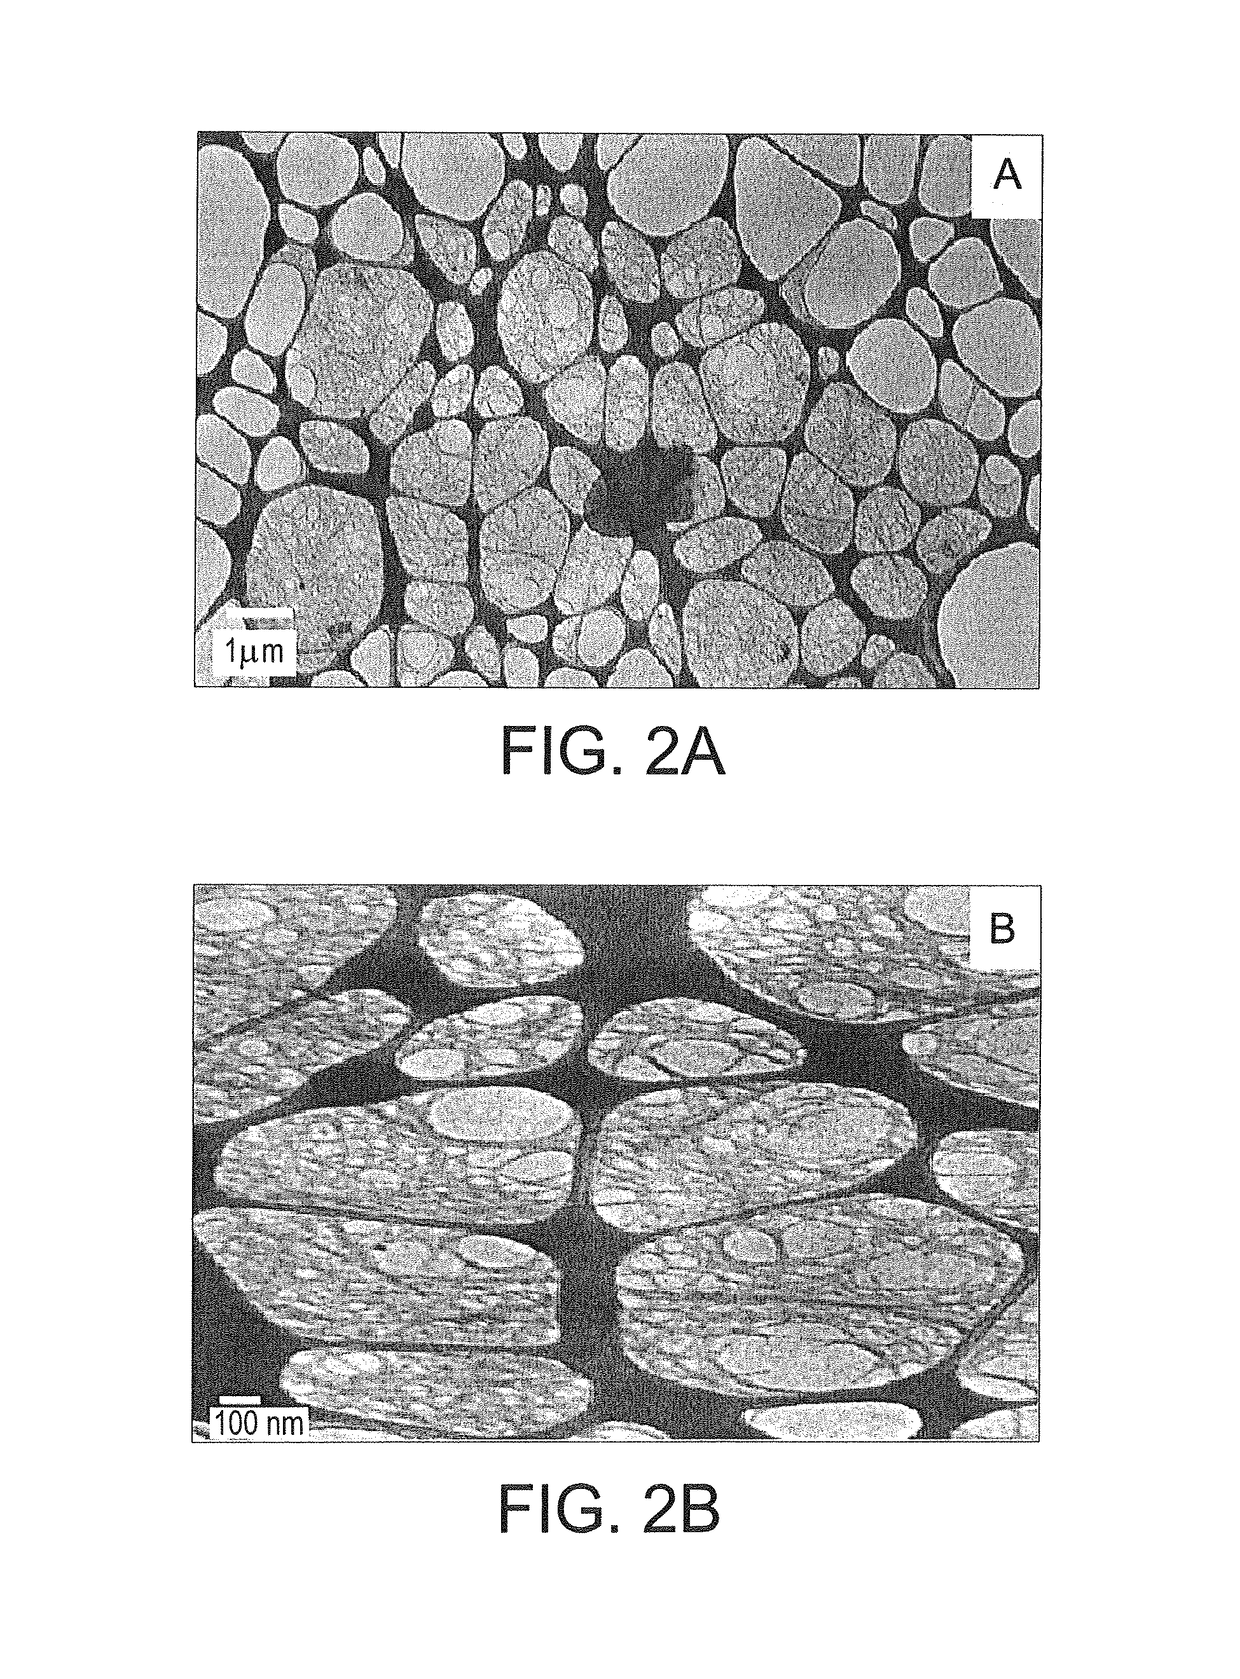 Method of fabricating biocompatible cellulose nanofibrils